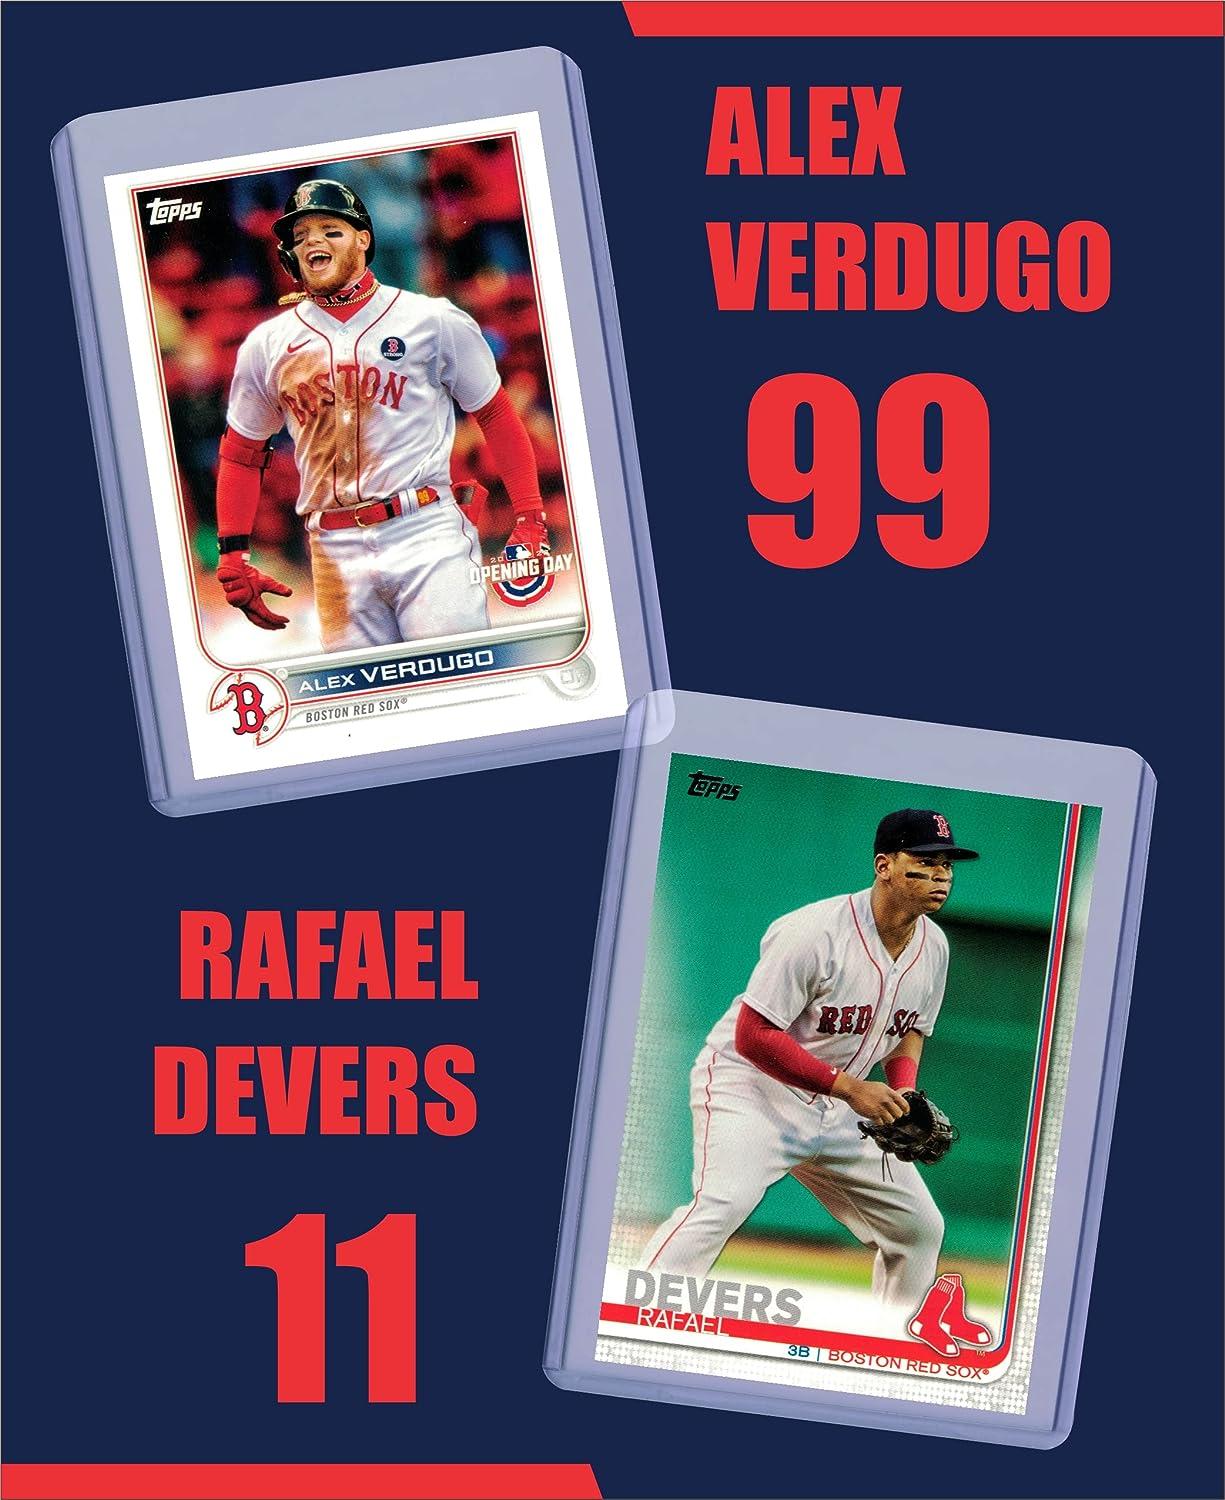 David Ortiz Boston Red Sox Assorted Baseball Cards 5 Card Lot